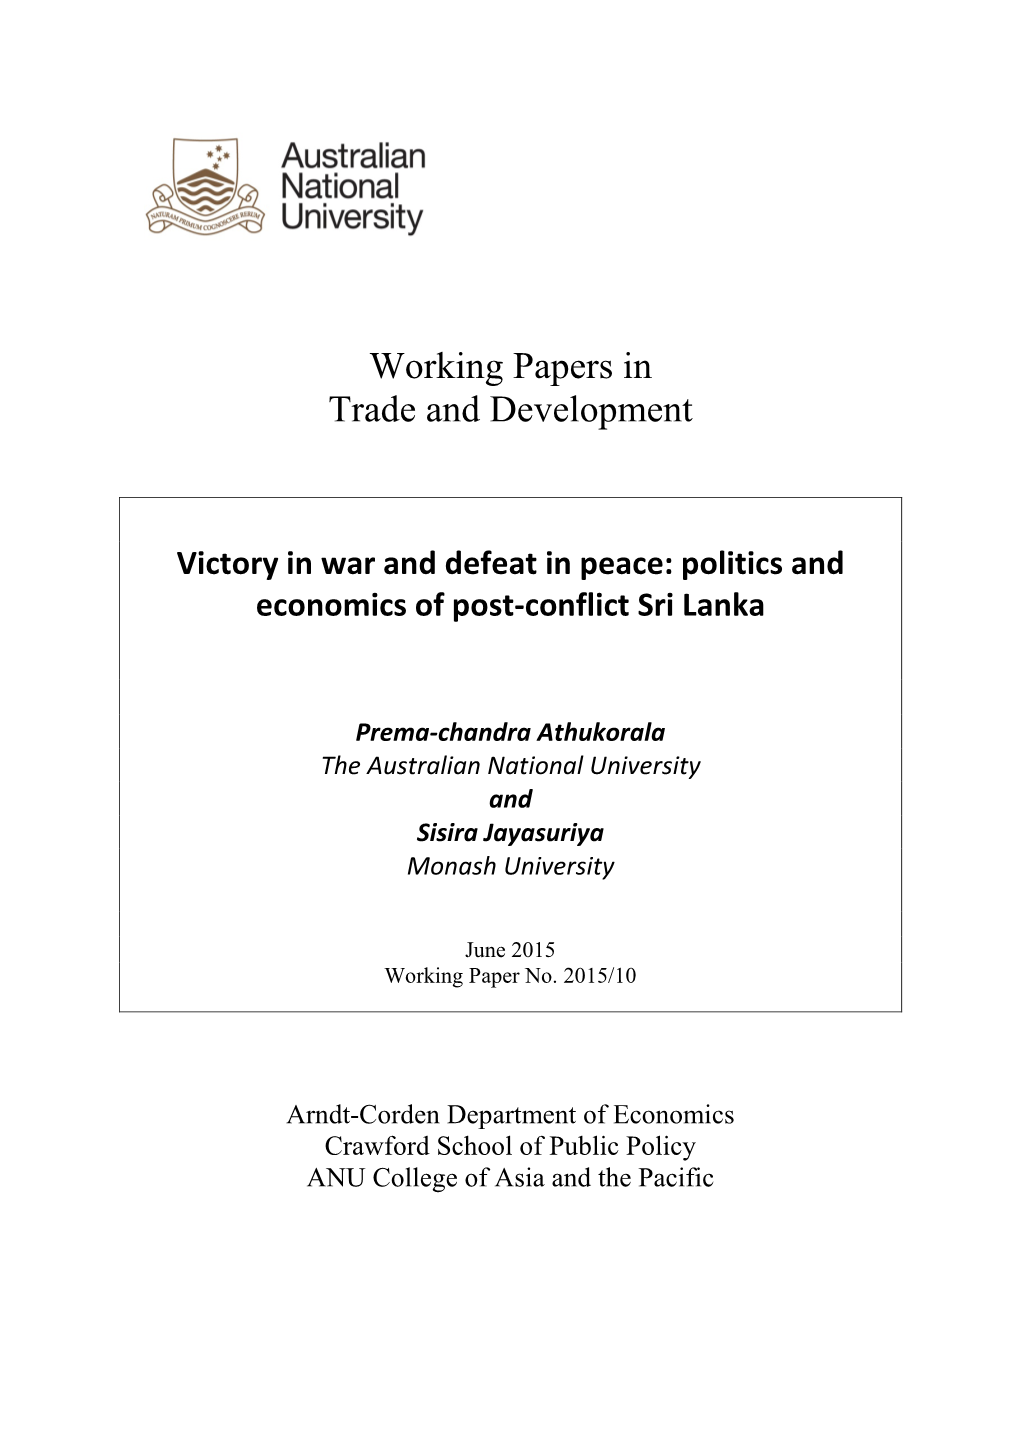 Politics and Economics of Post-Conflict Sri Lanka